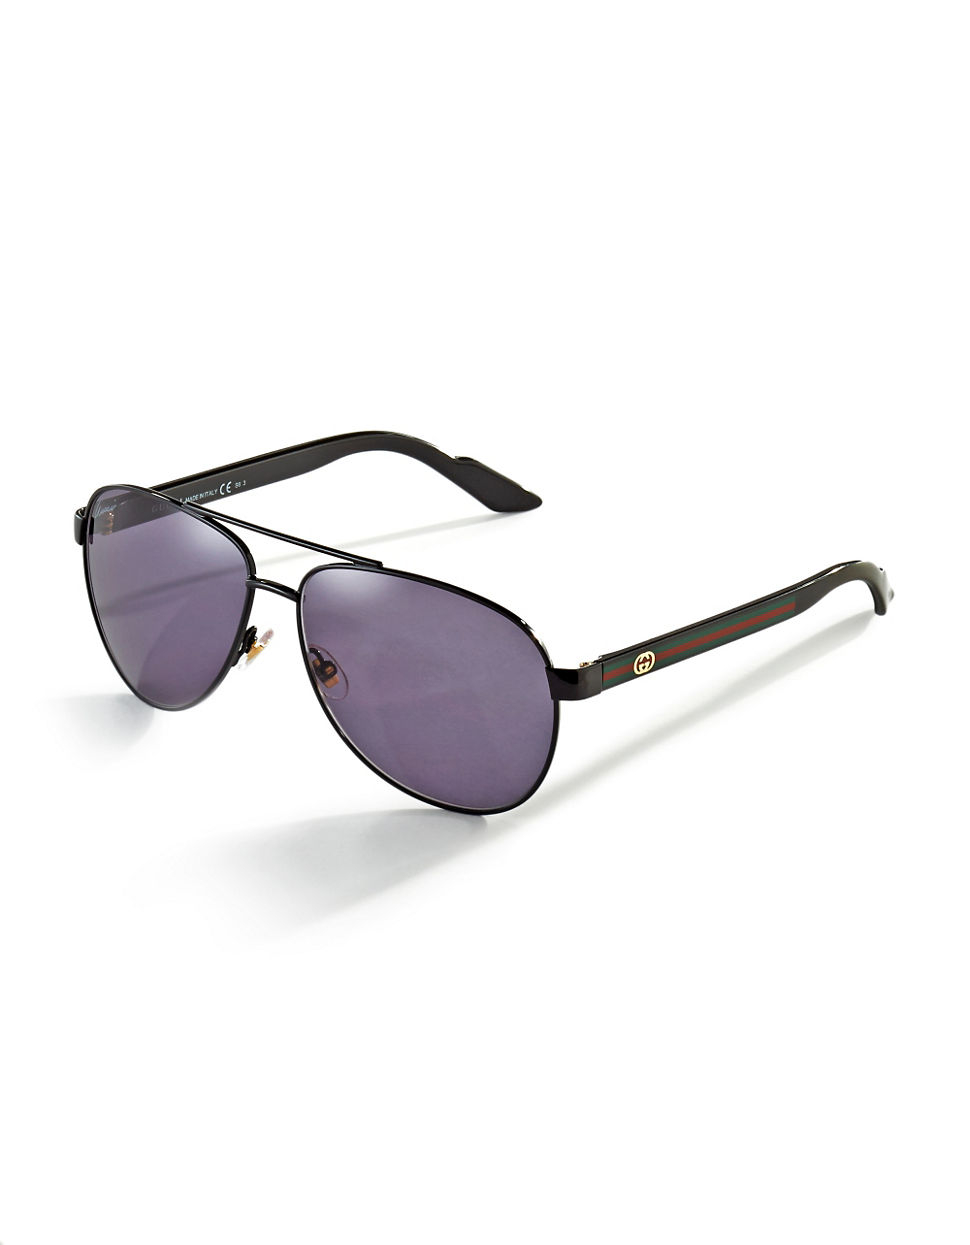 Lyst - Gucci Aviator Sunglasses in Black for Men